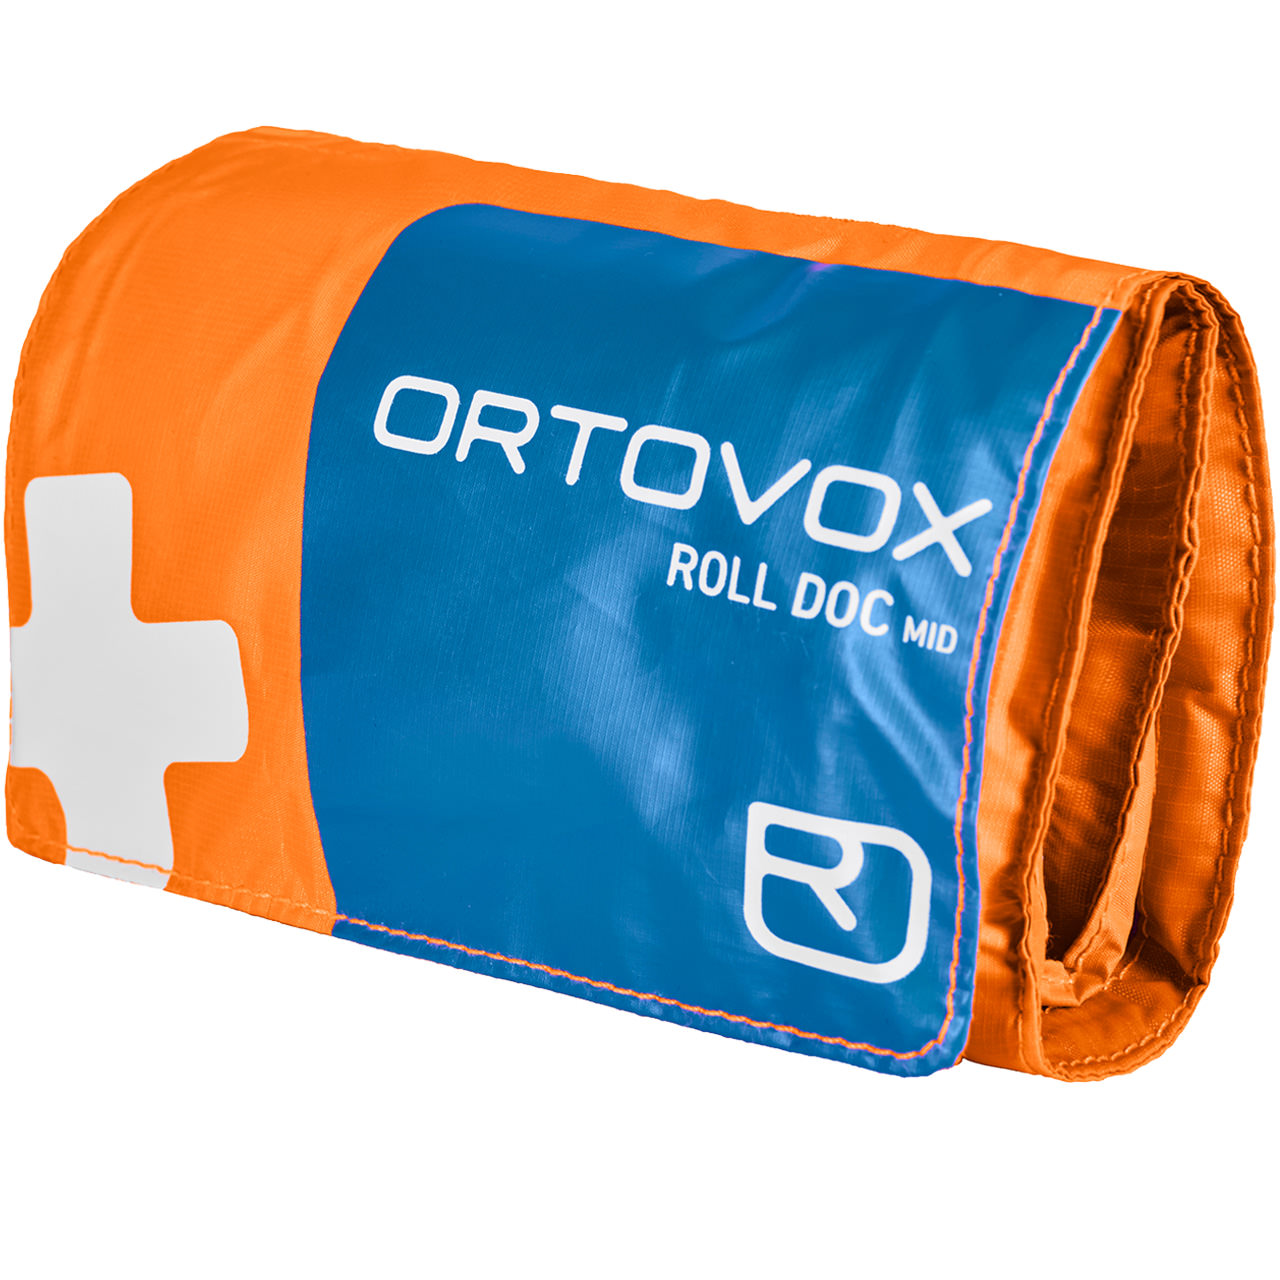 Ortovox roll-doc-mid .jpg